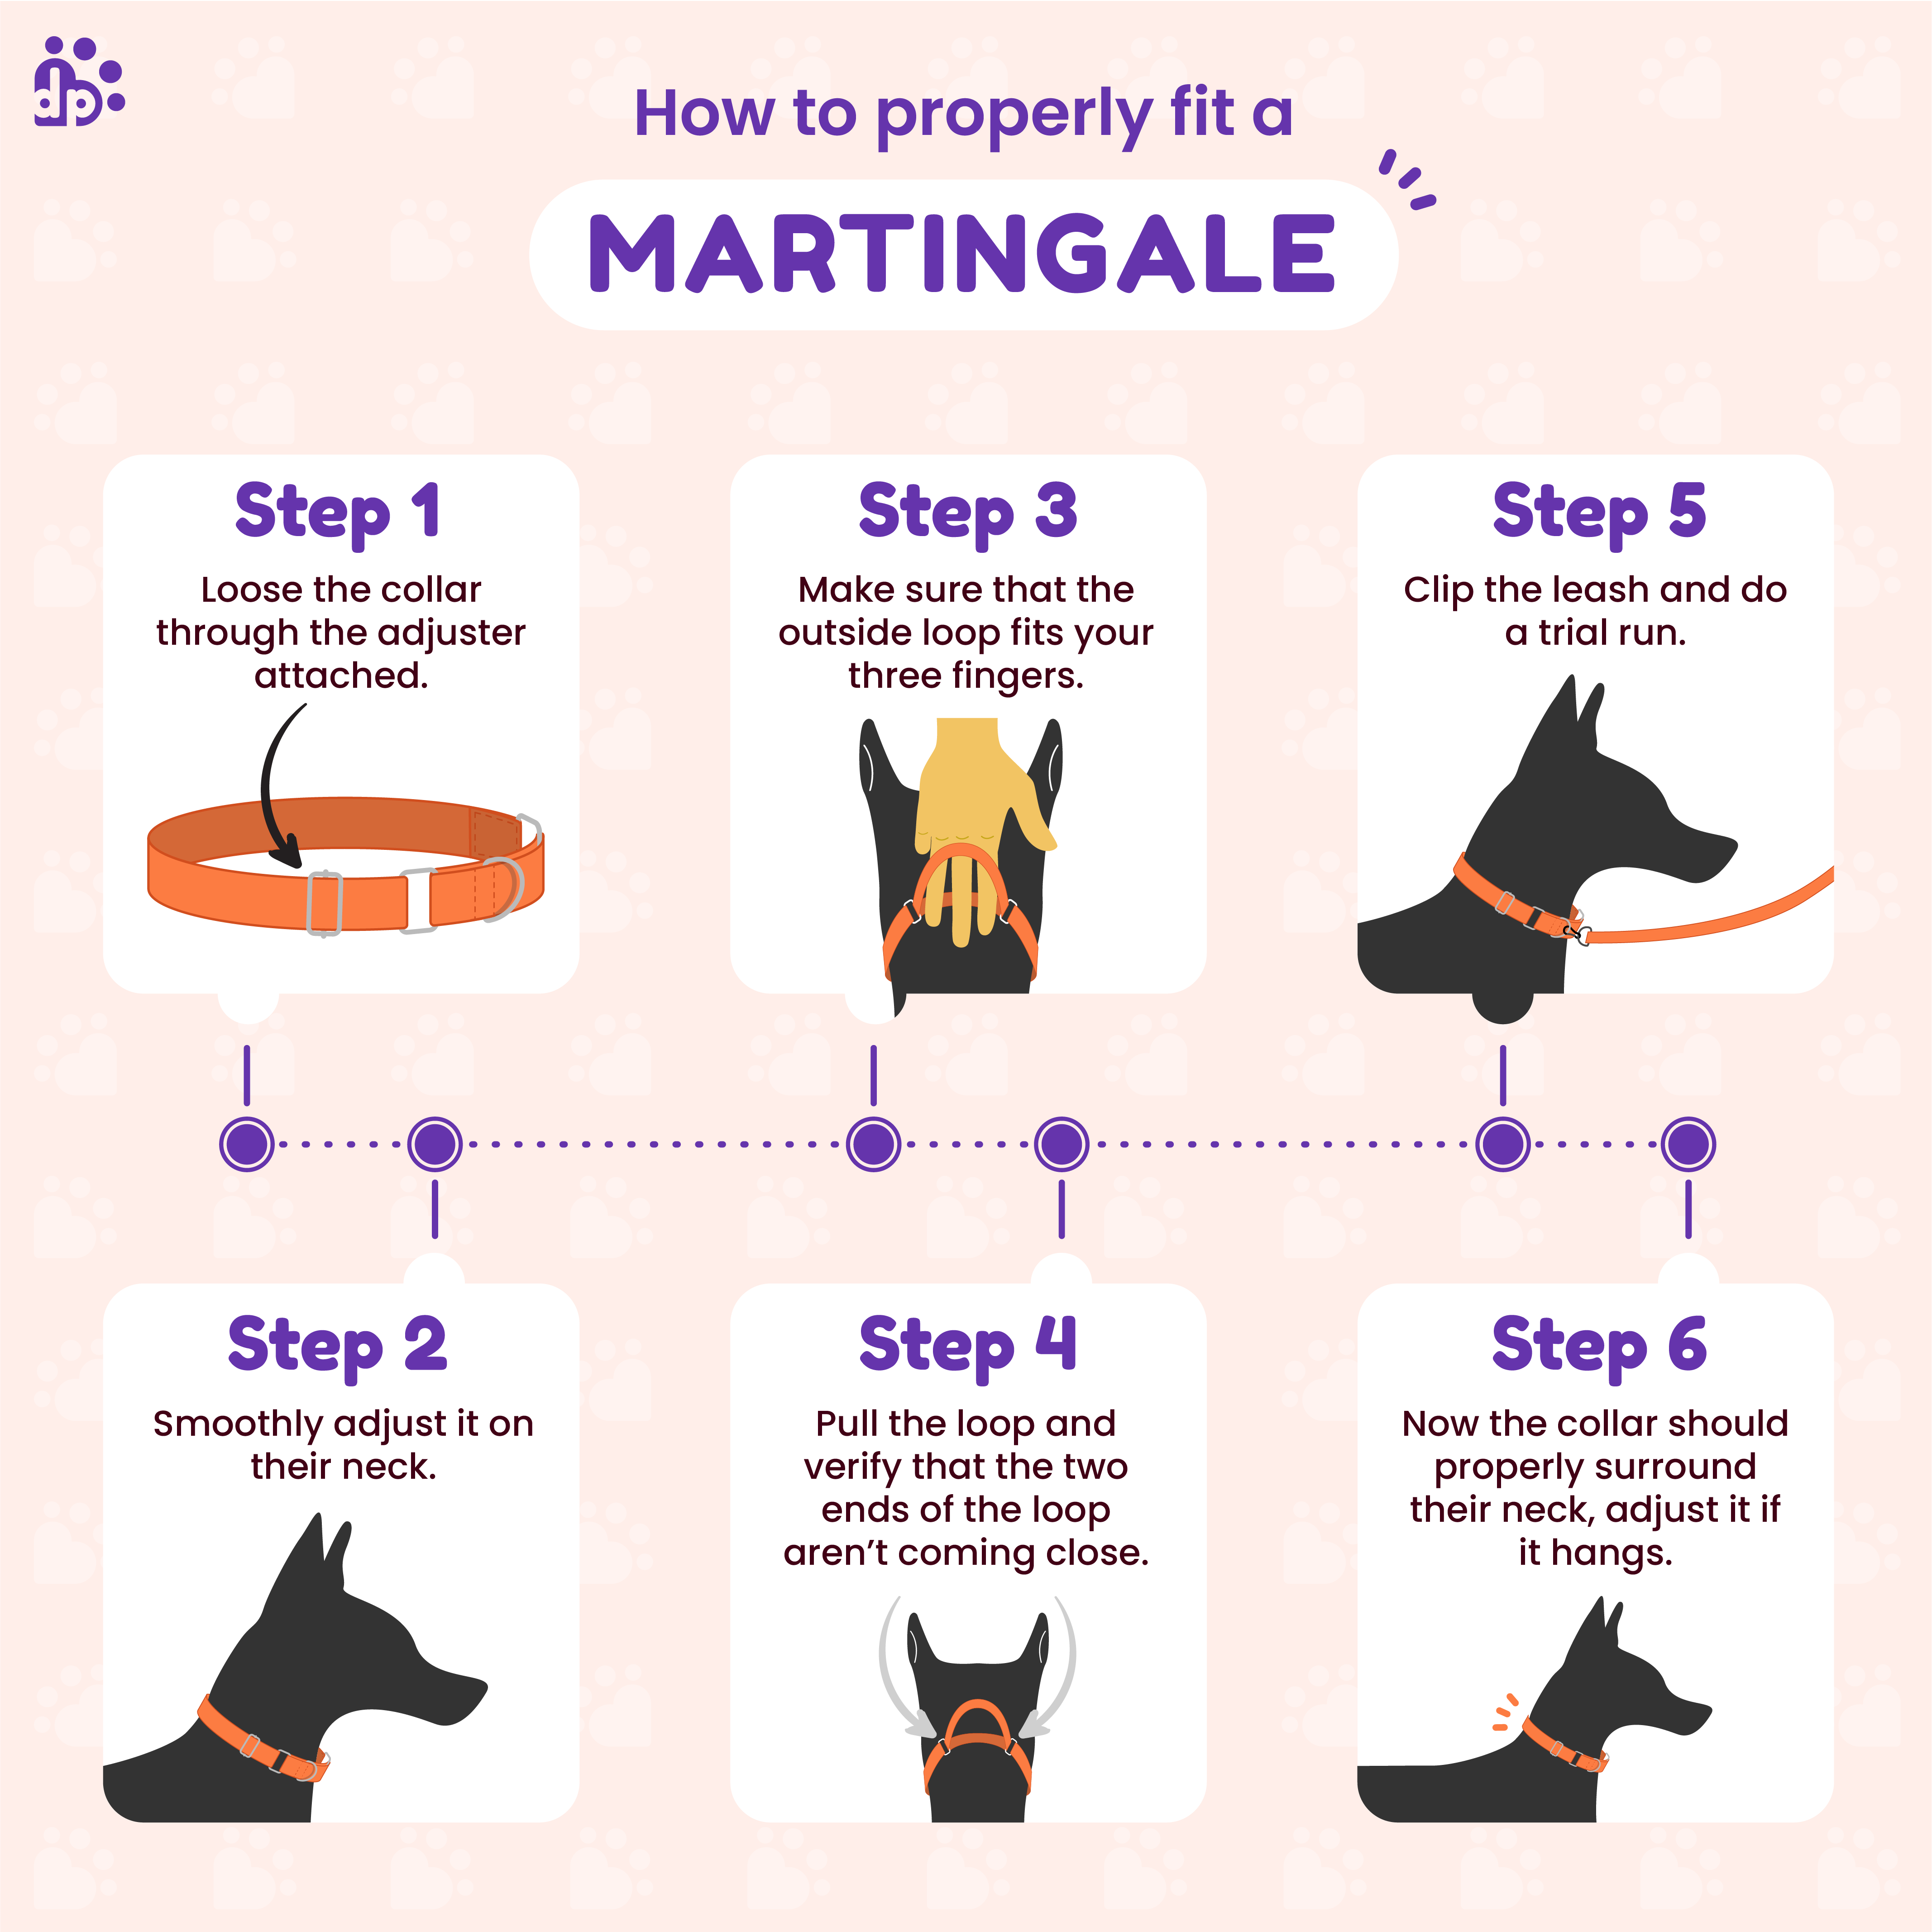 Dear Pet Double Trouble Martingale Pink & Purple Dog Collar - Customisable